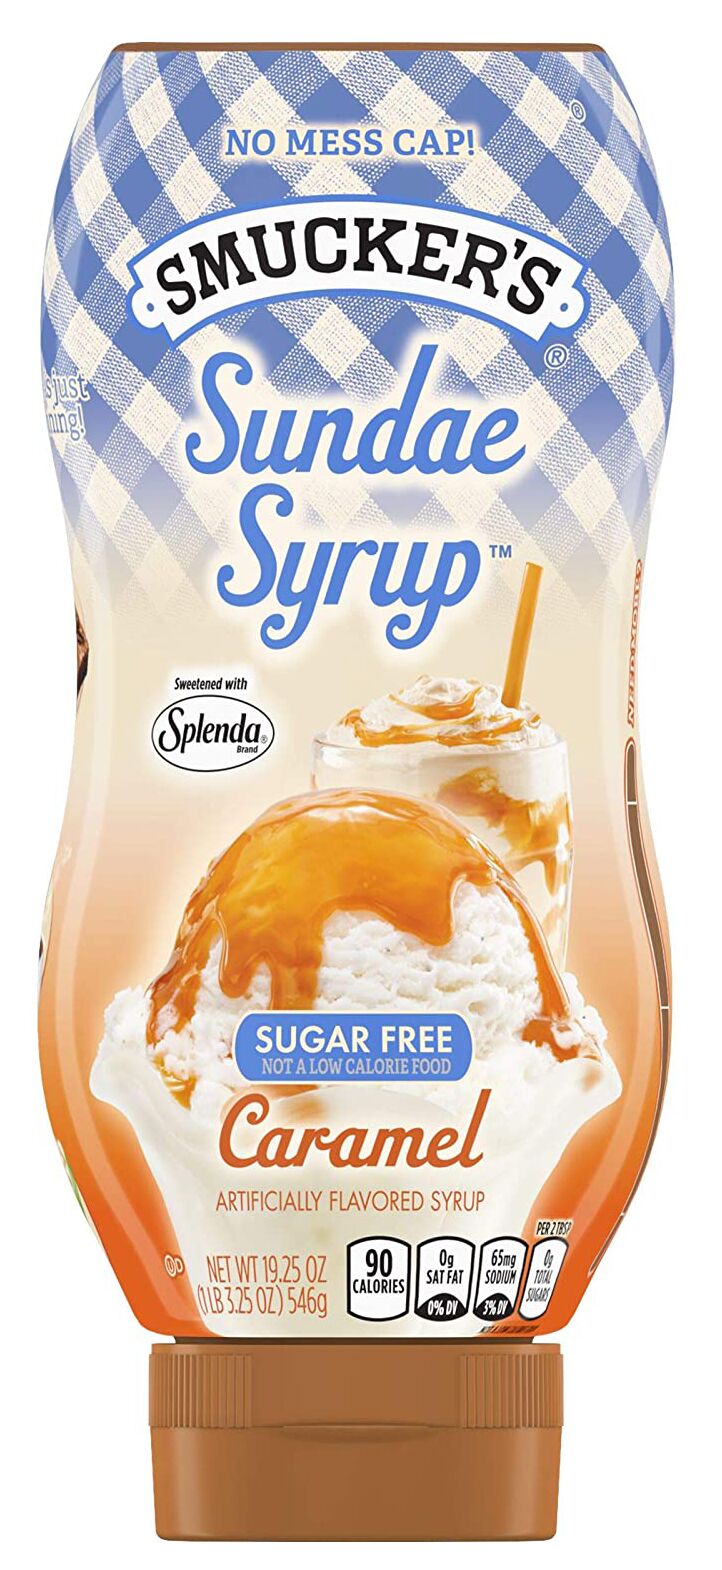 Smuckers Sugar Free Sundae Syrup